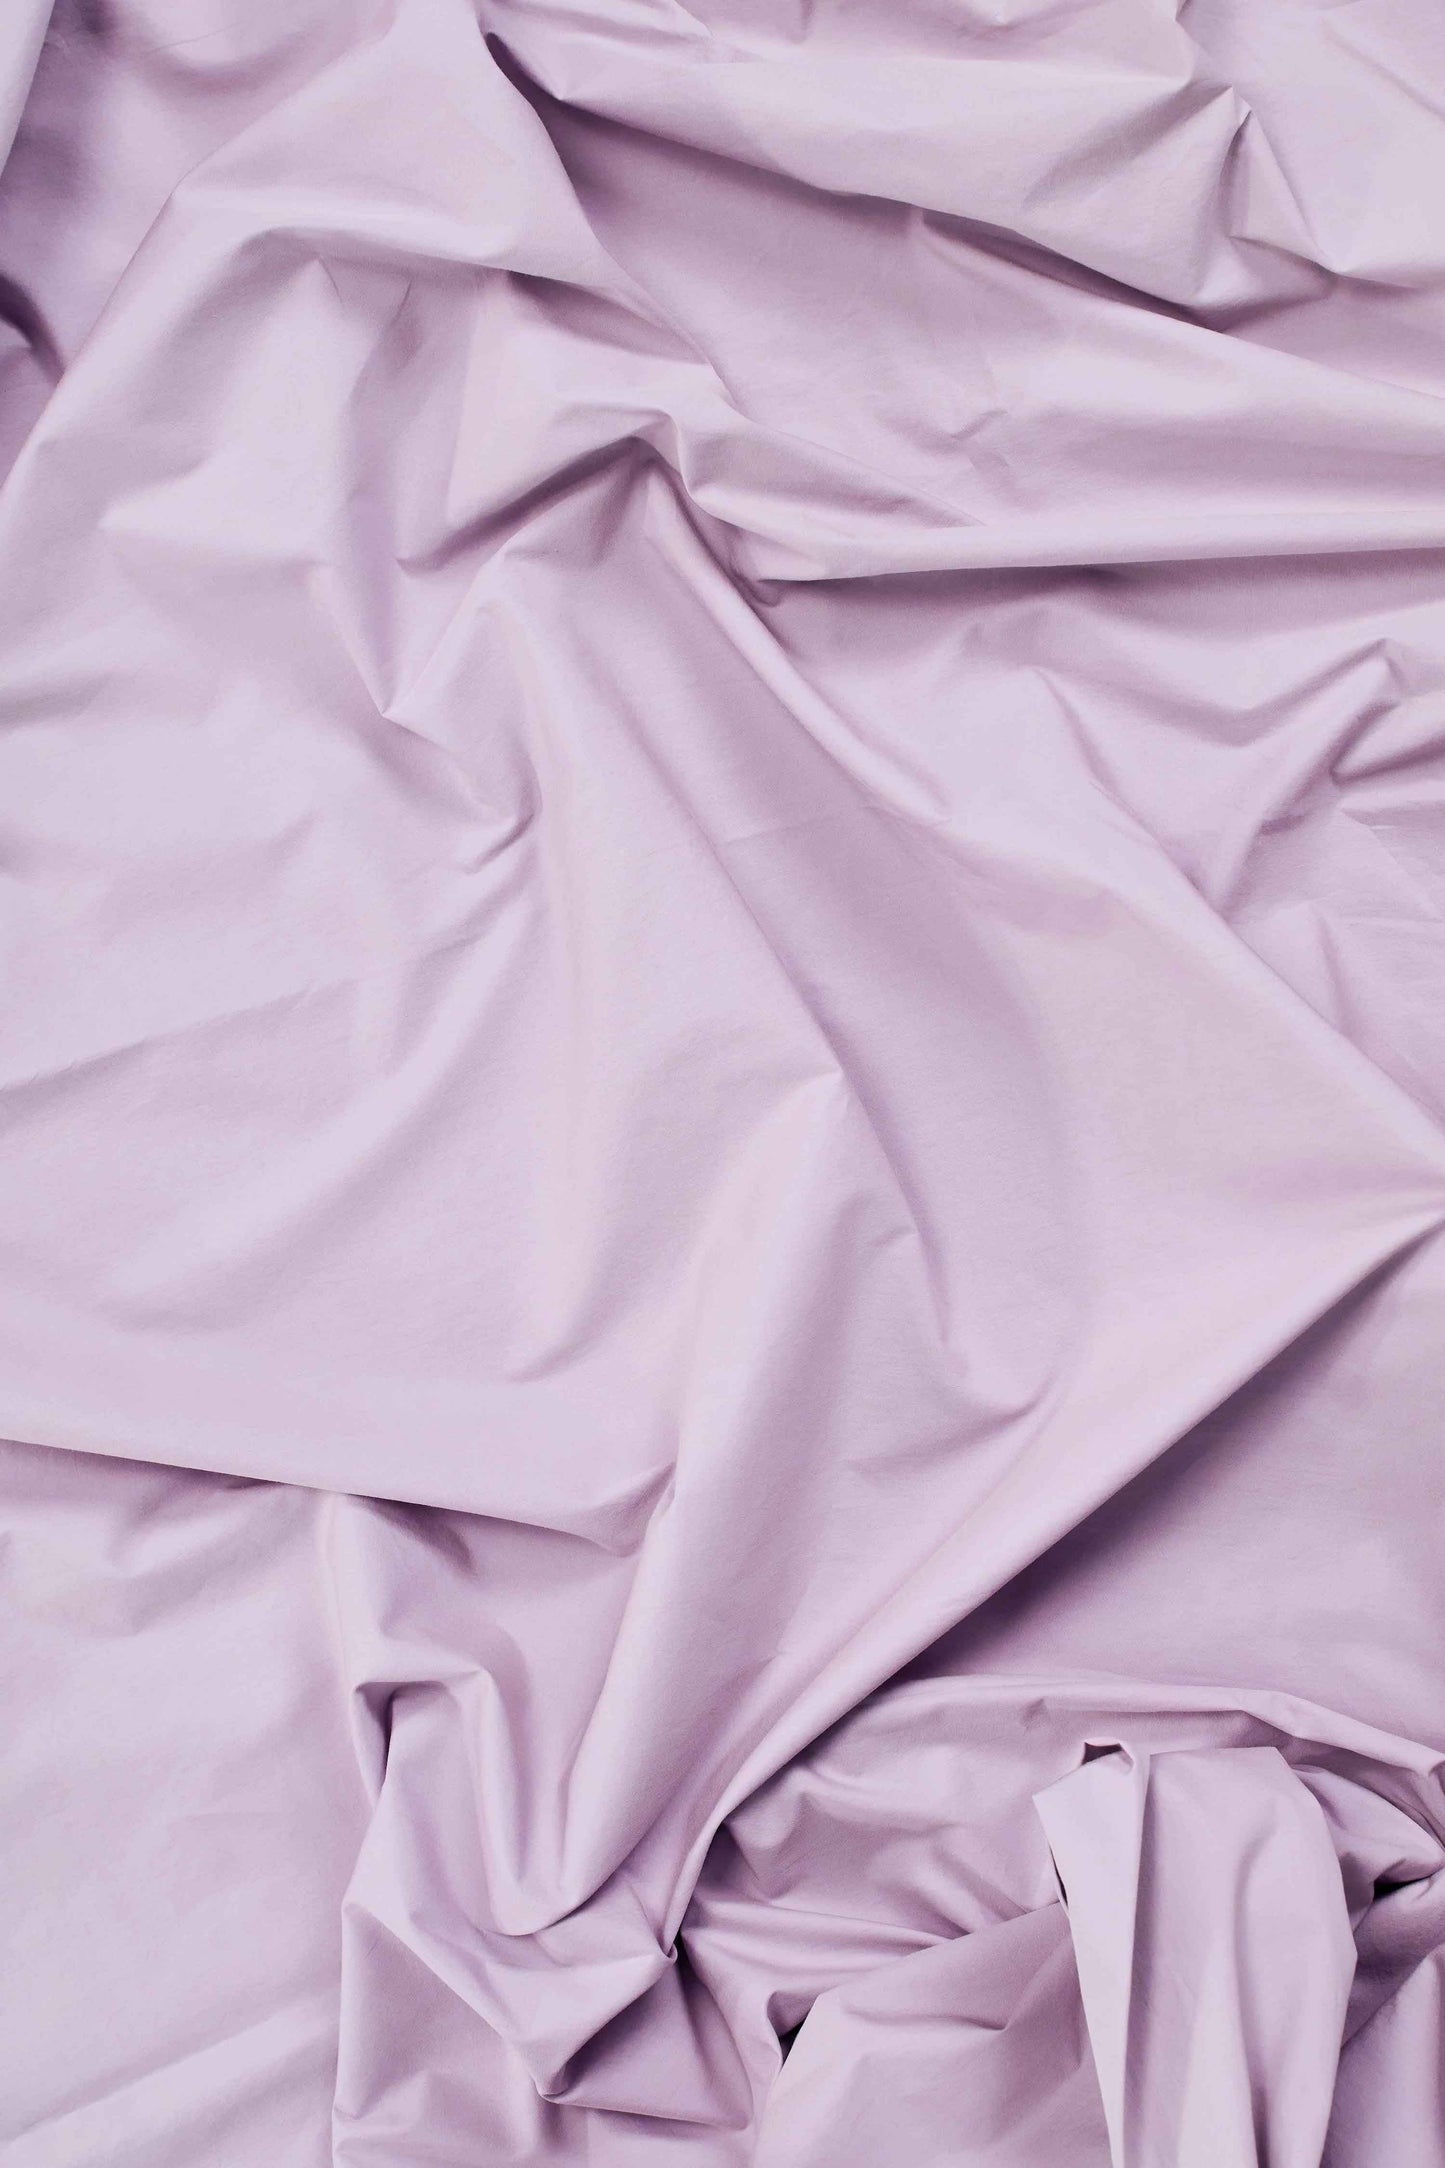 Mono Organic Cotton Percale Pillow Pair - Lilac Pillows in King Pillow